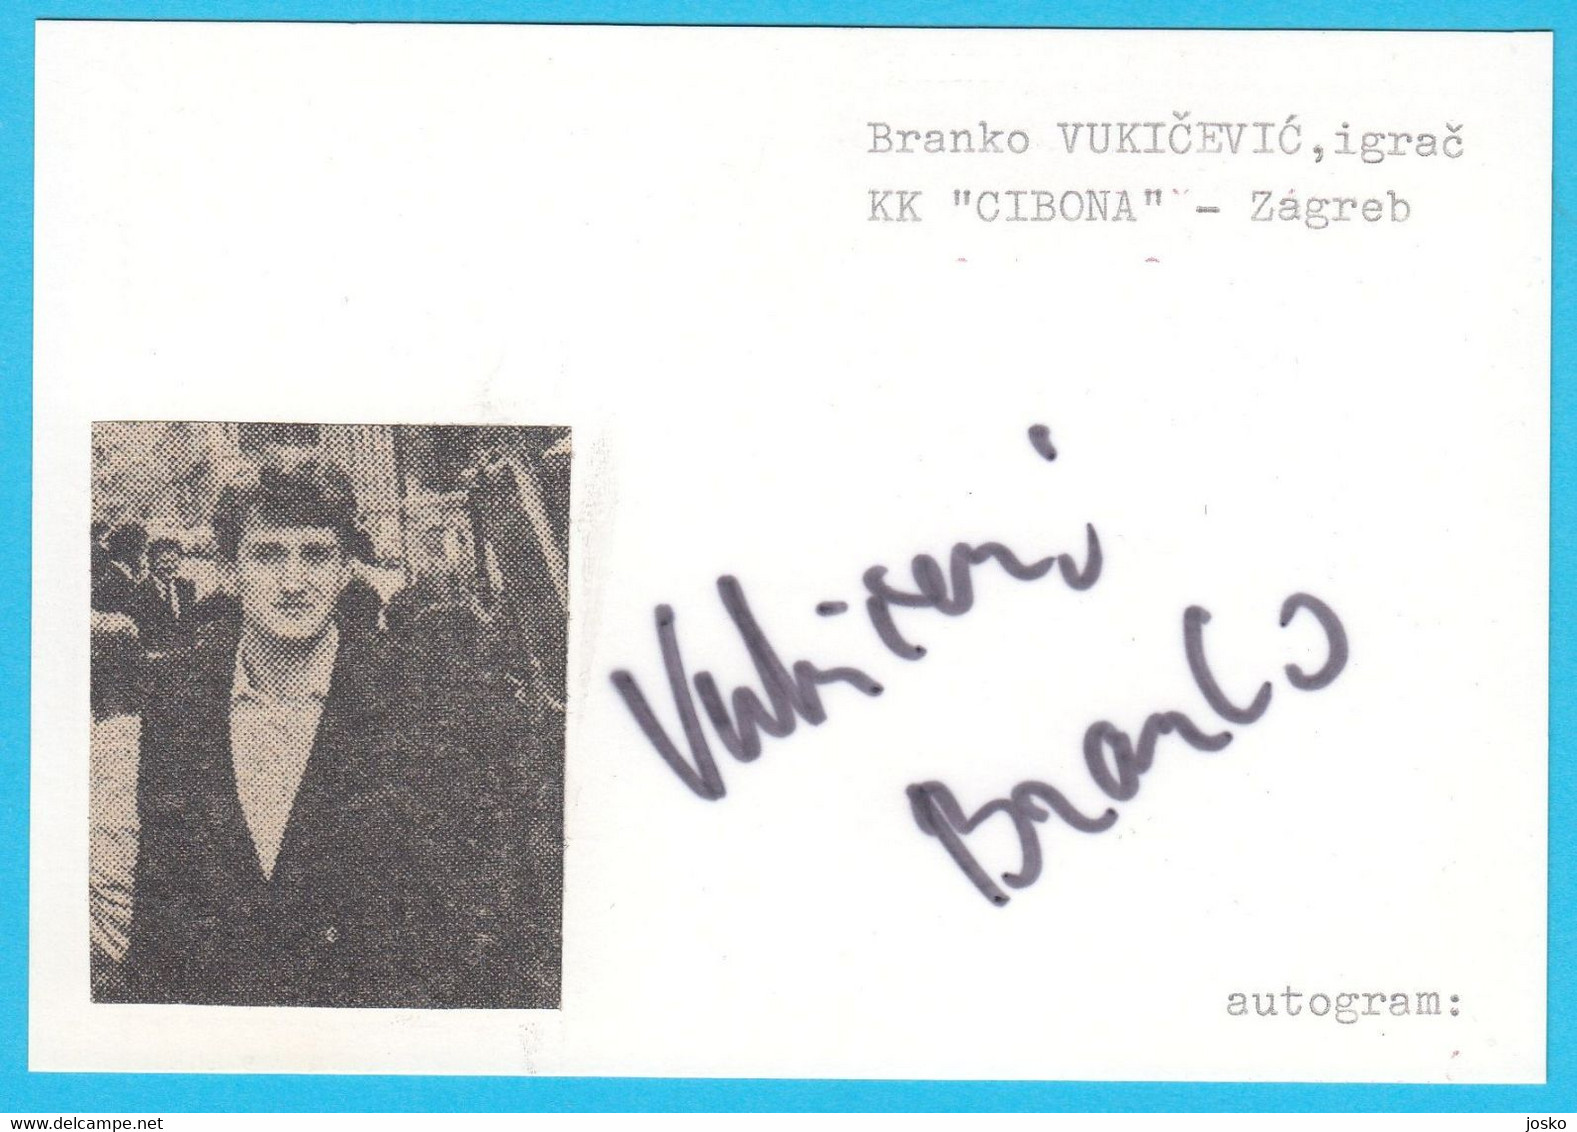 BRANKO VUKICEVIC - Yugoslavia Basketball Team BRONZE MEDAL On Olympic Games 1984 * Basket-ball Pallacanestro Baloncesto - Autogramme